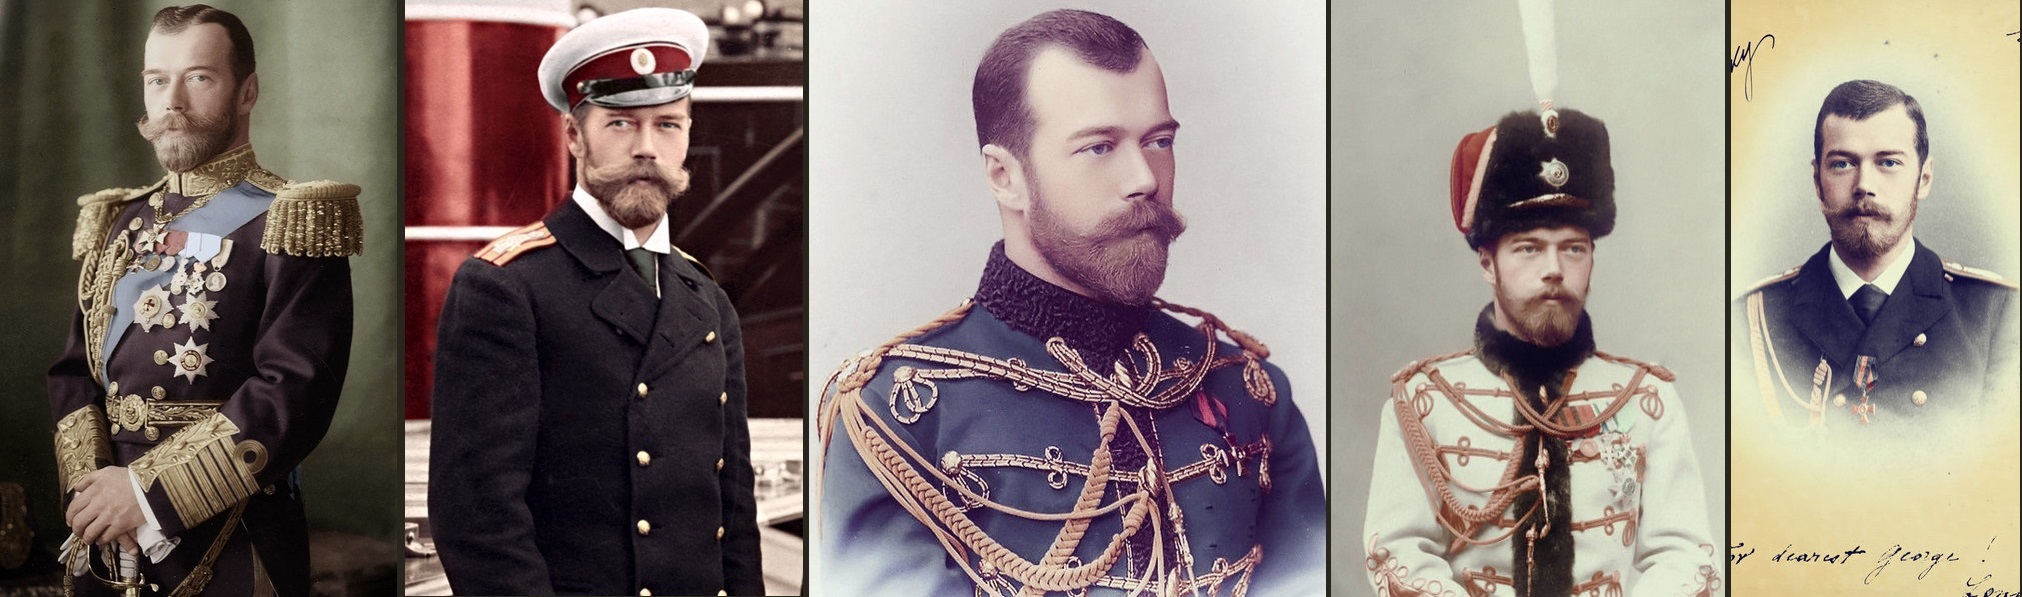 Император Николай 2 без бороды